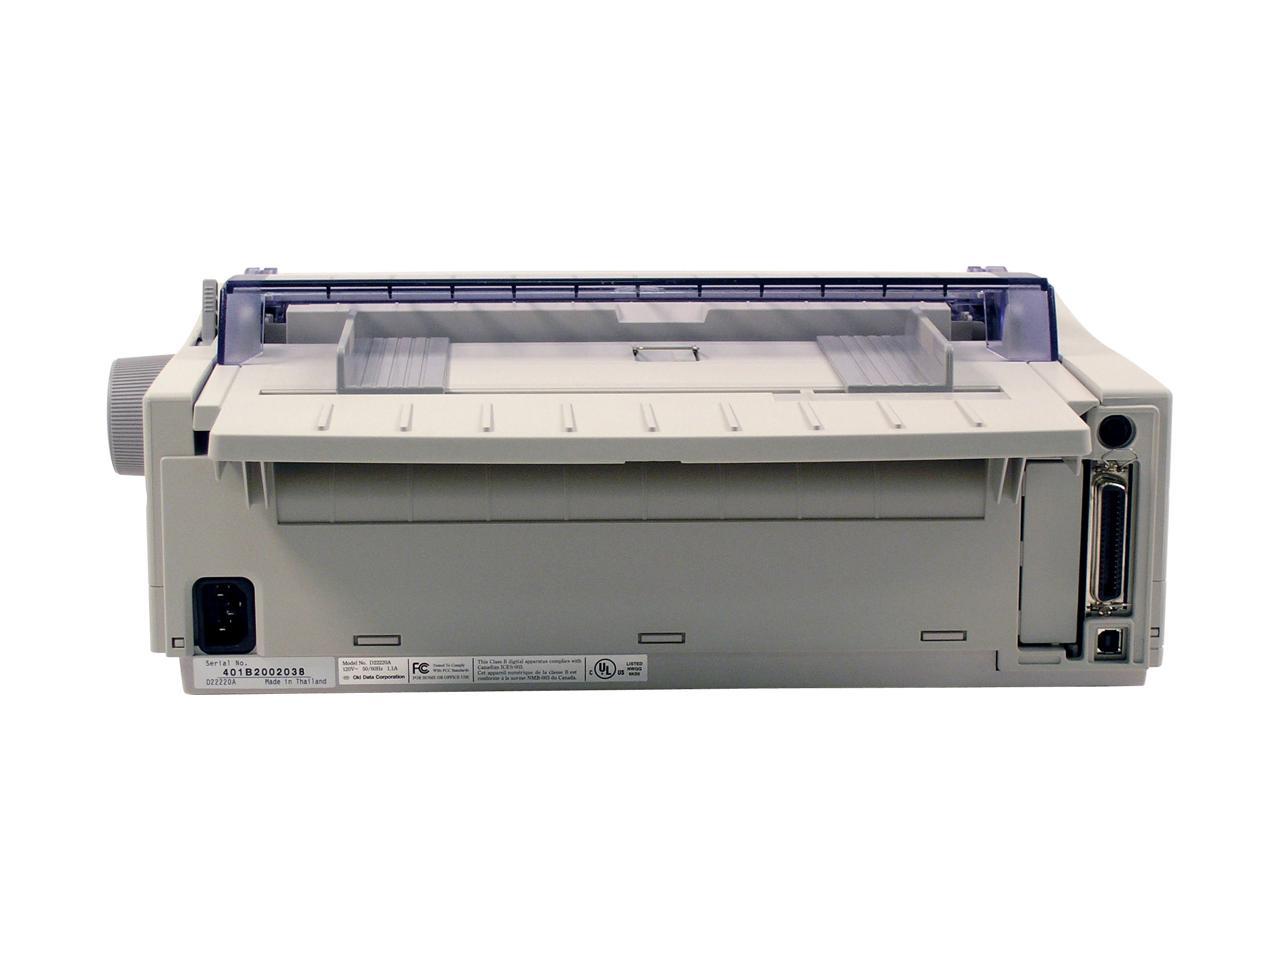 okidata microline 320 turbo 9-pin impact printer